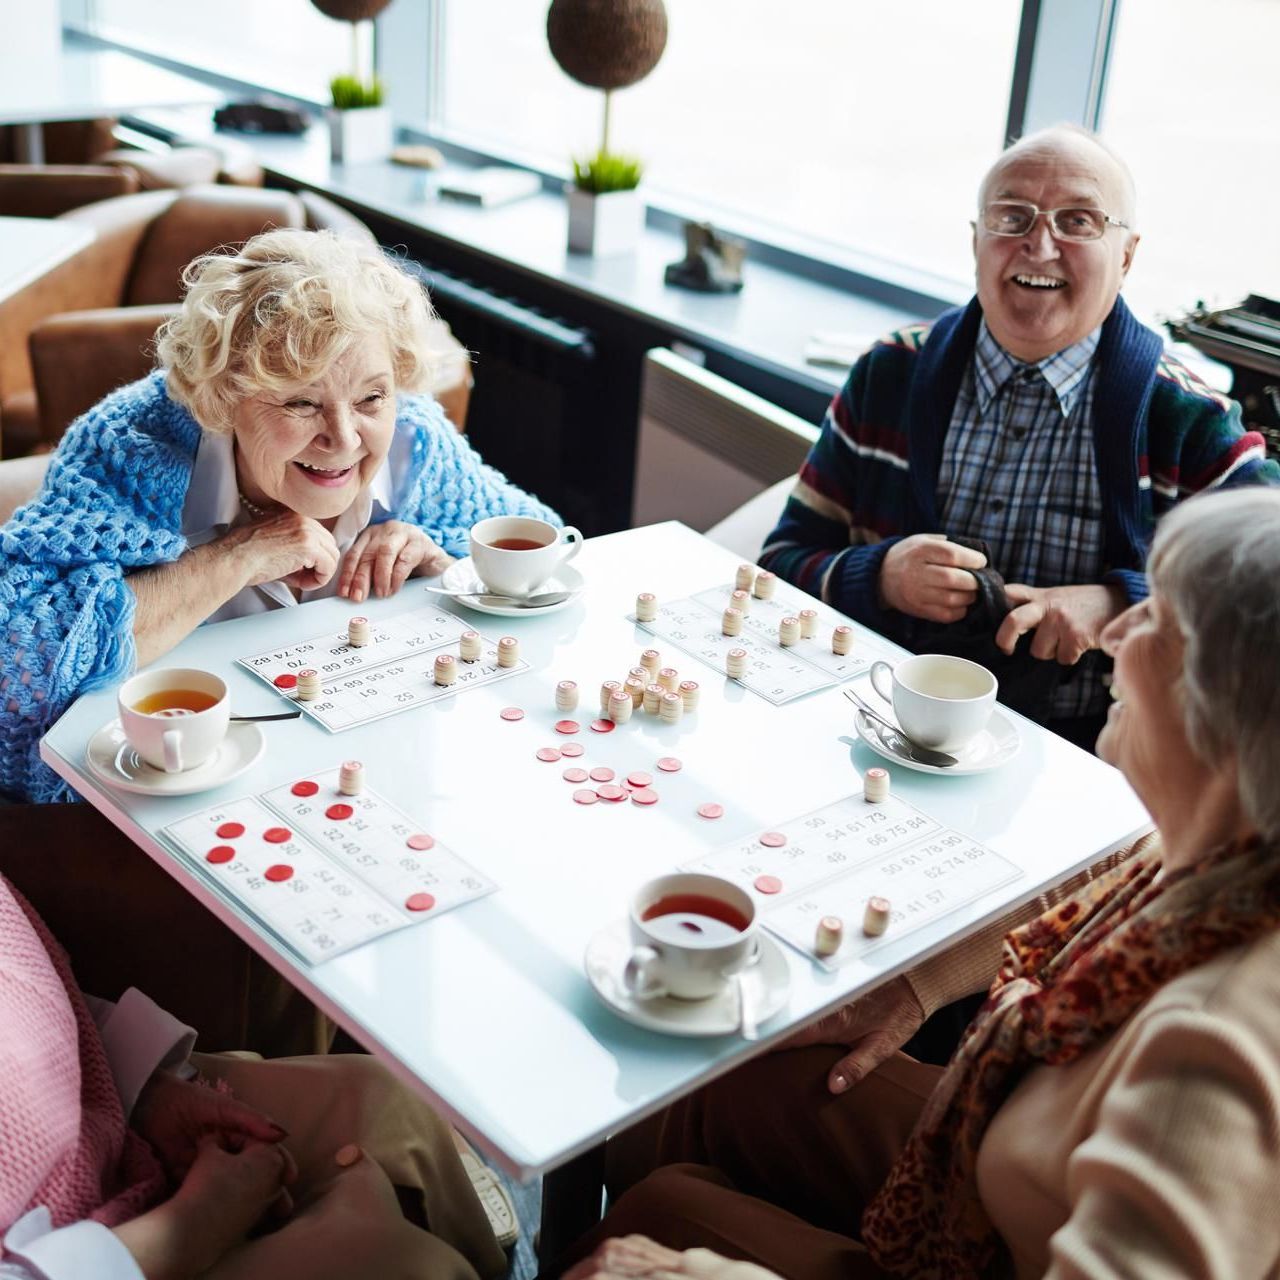 Group of elderly friends playing bingo in a public setting.